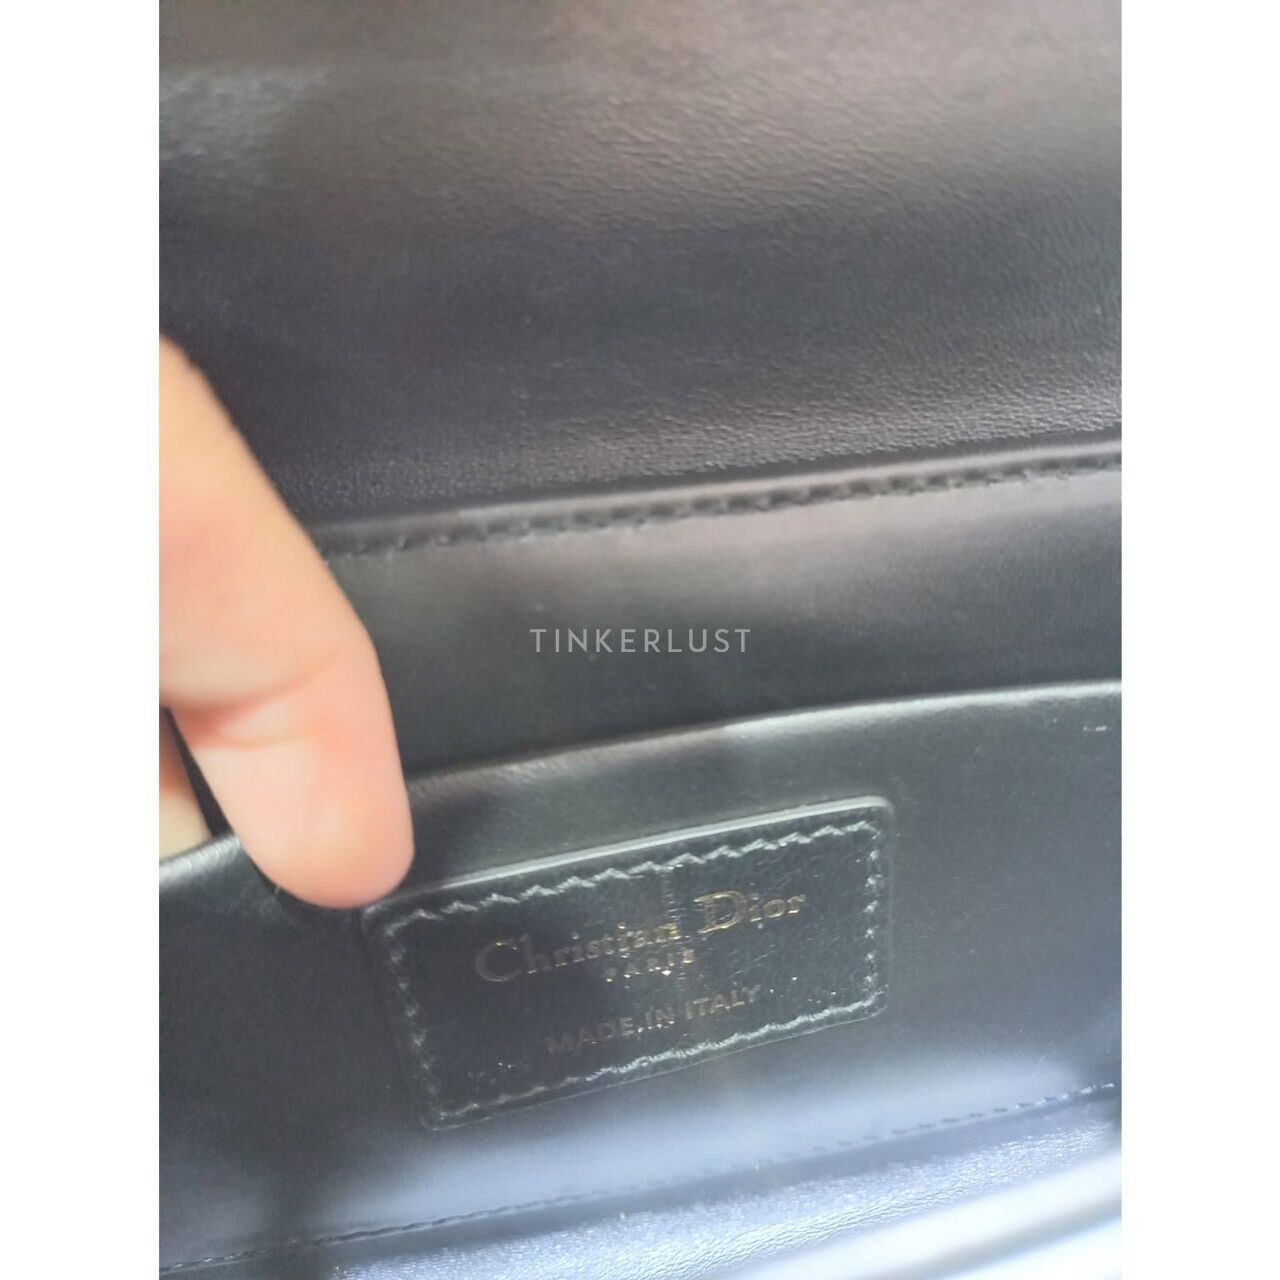 Christian Dior Montaigne 30 Black Calfskin GHW 2020 Shoulder Bag